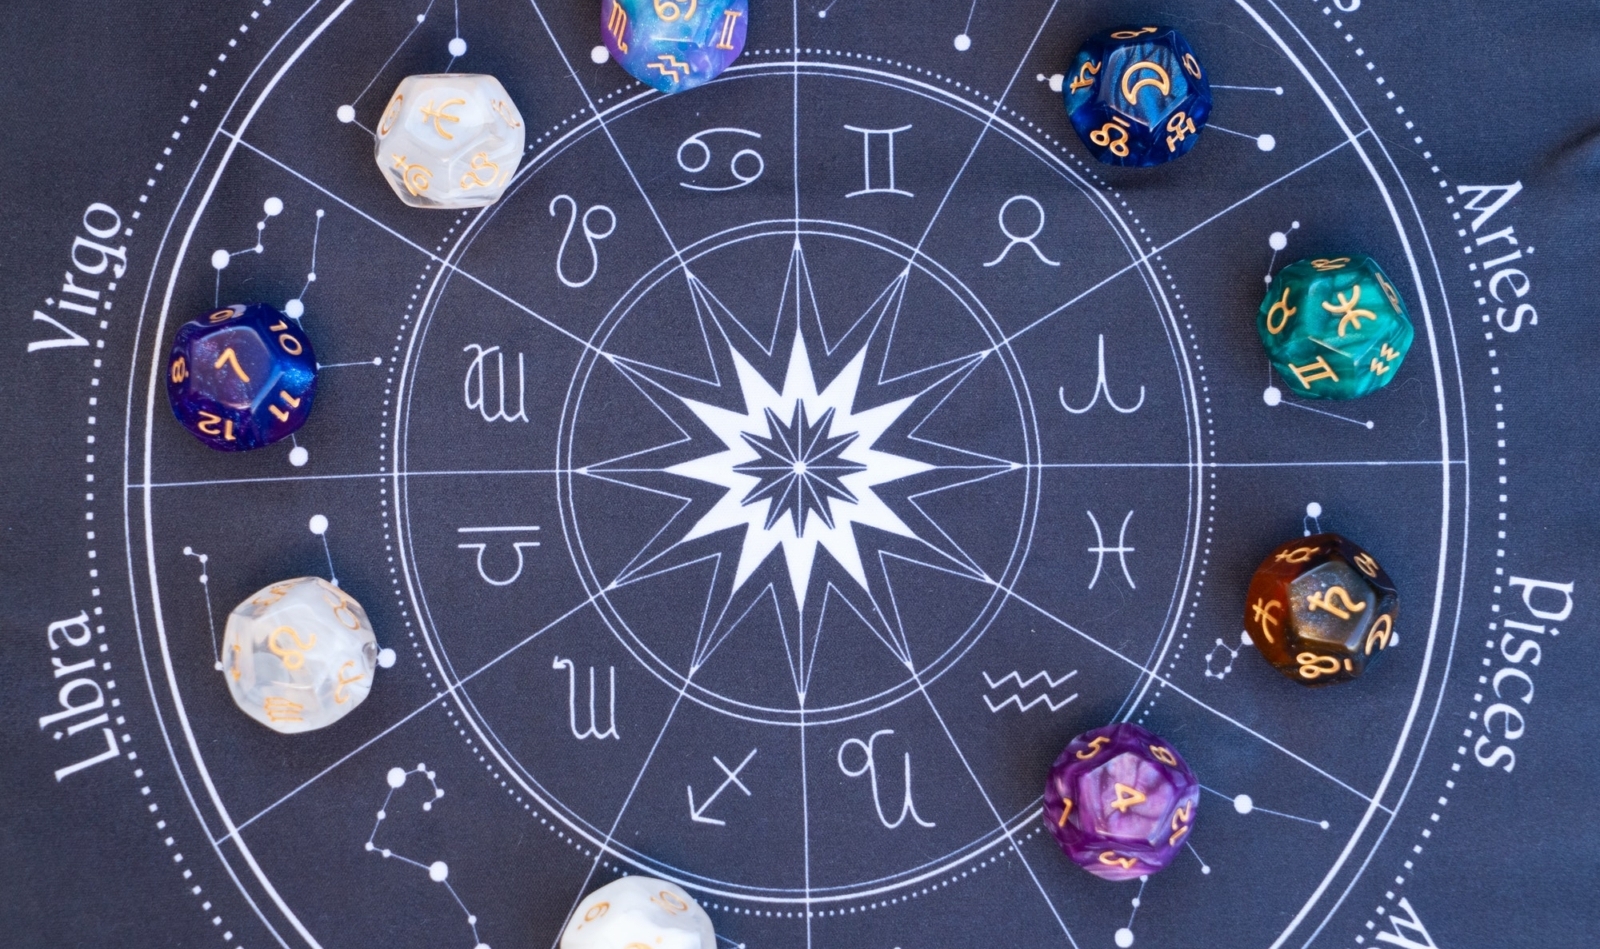 Zodiac horoscope with divination says